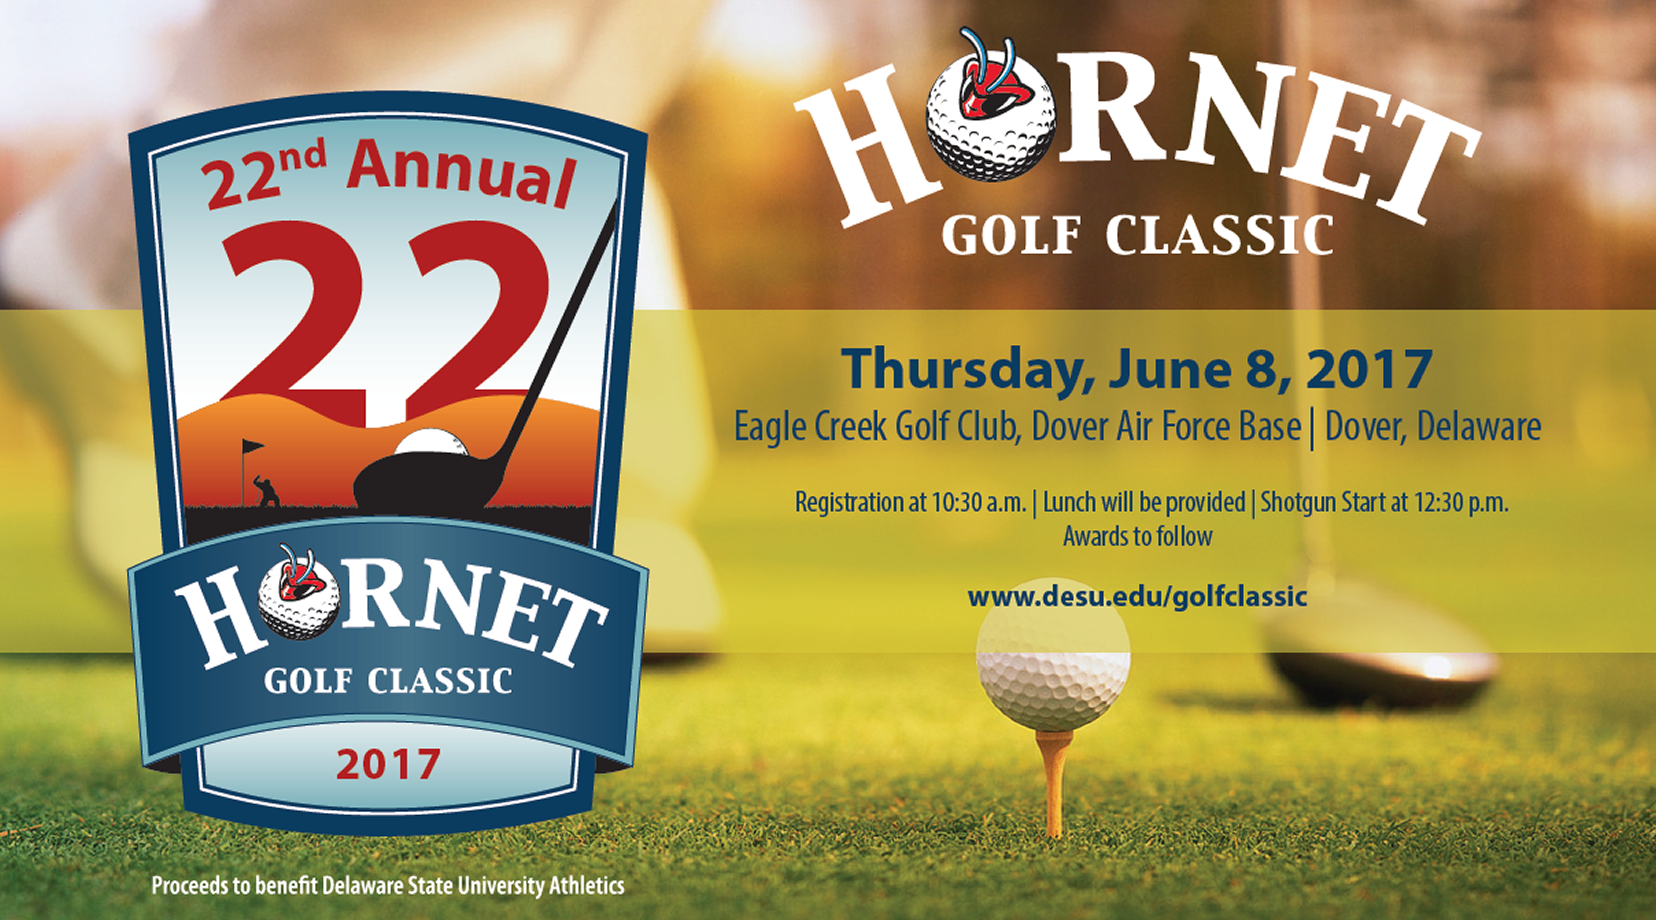 Hornet Golf Classic 2017